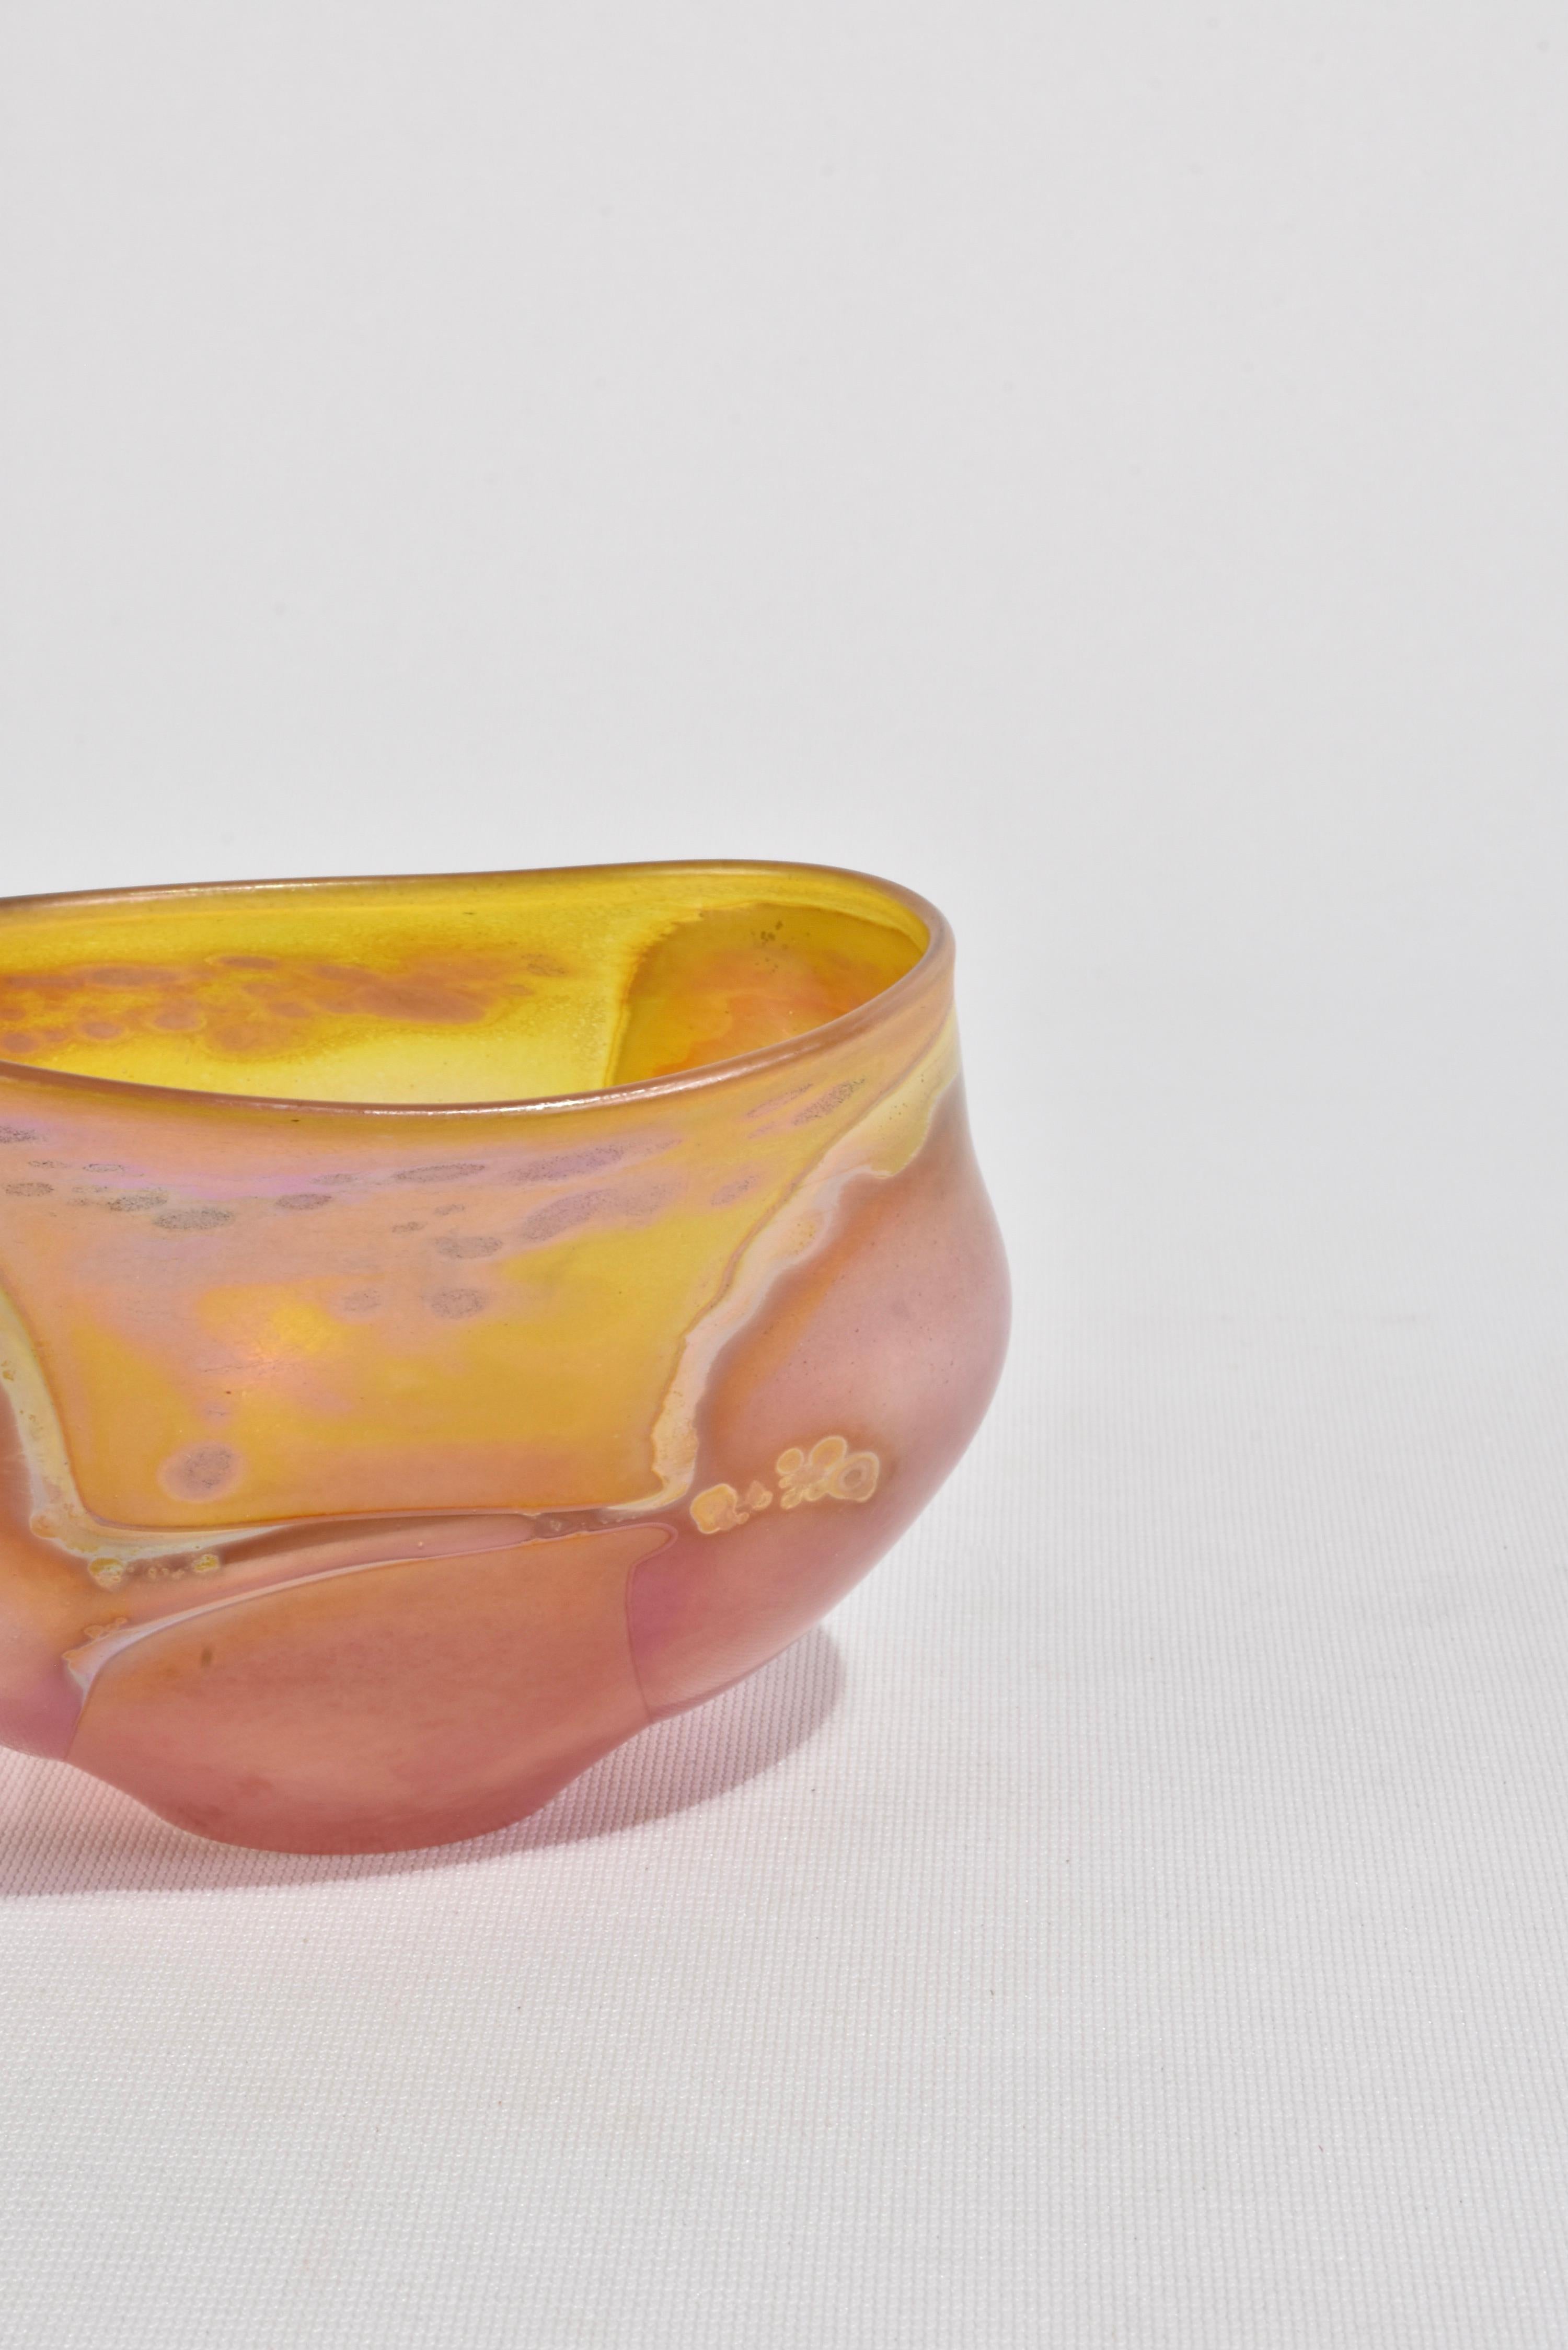 Iridescent Glass Bowl In Good Condition For Sale In Richmond, VA